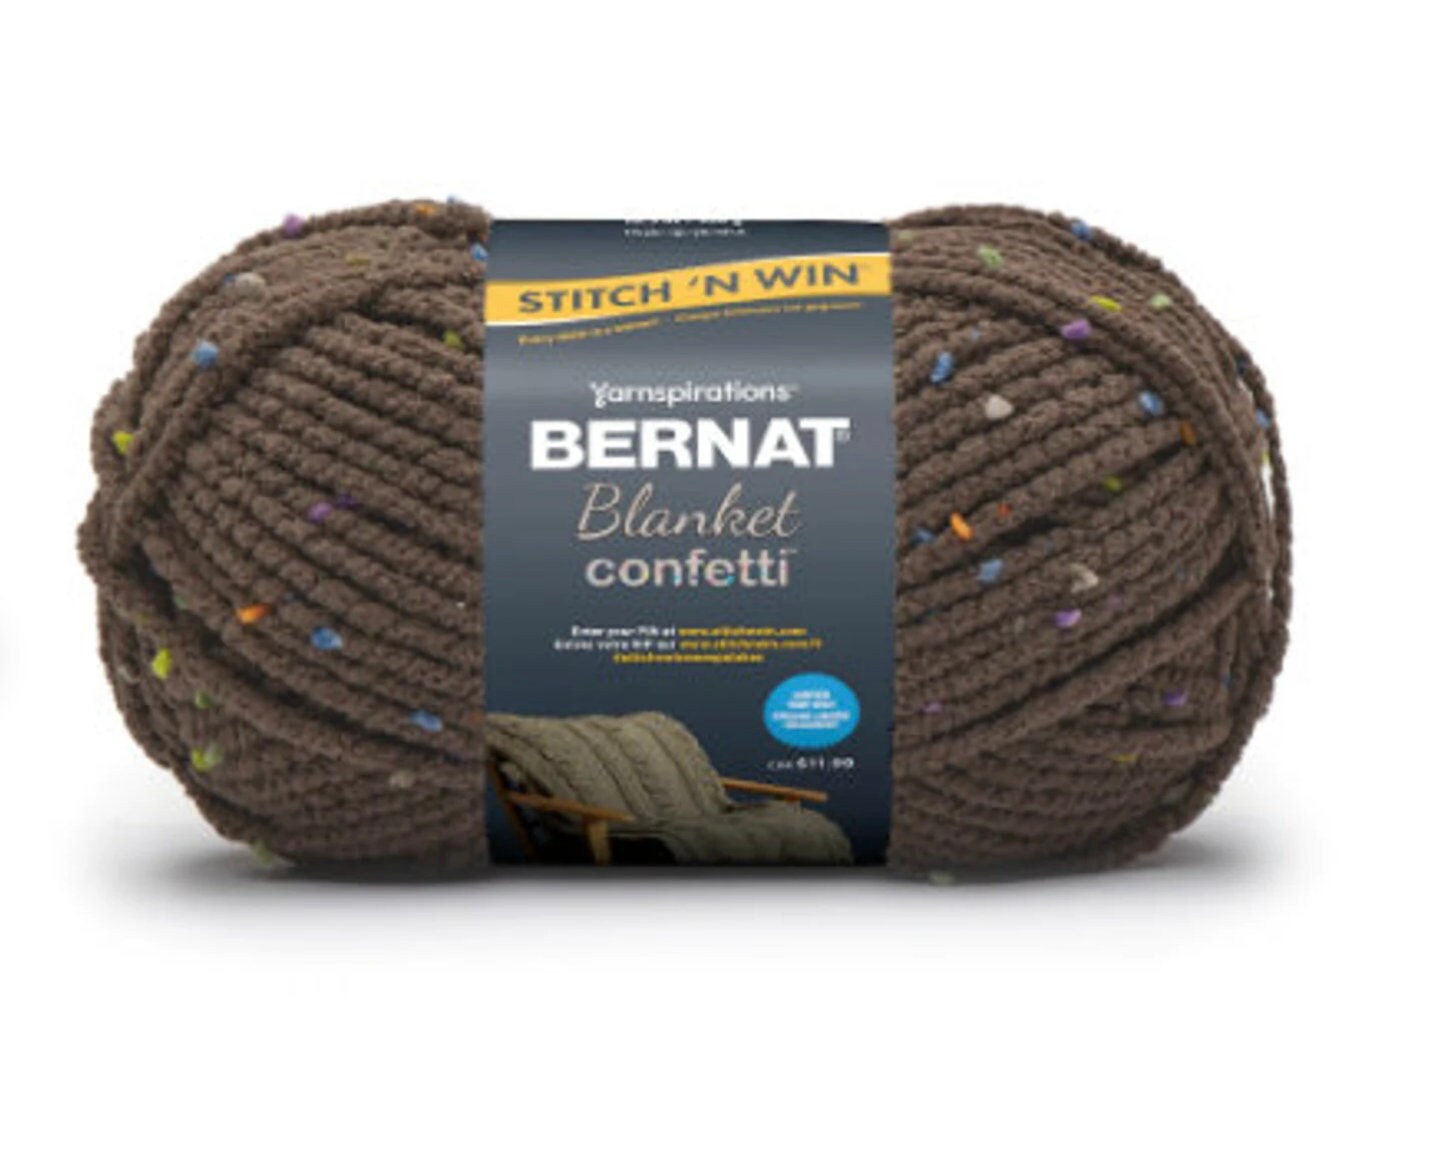 Introducing Bernat Blanket Confetti